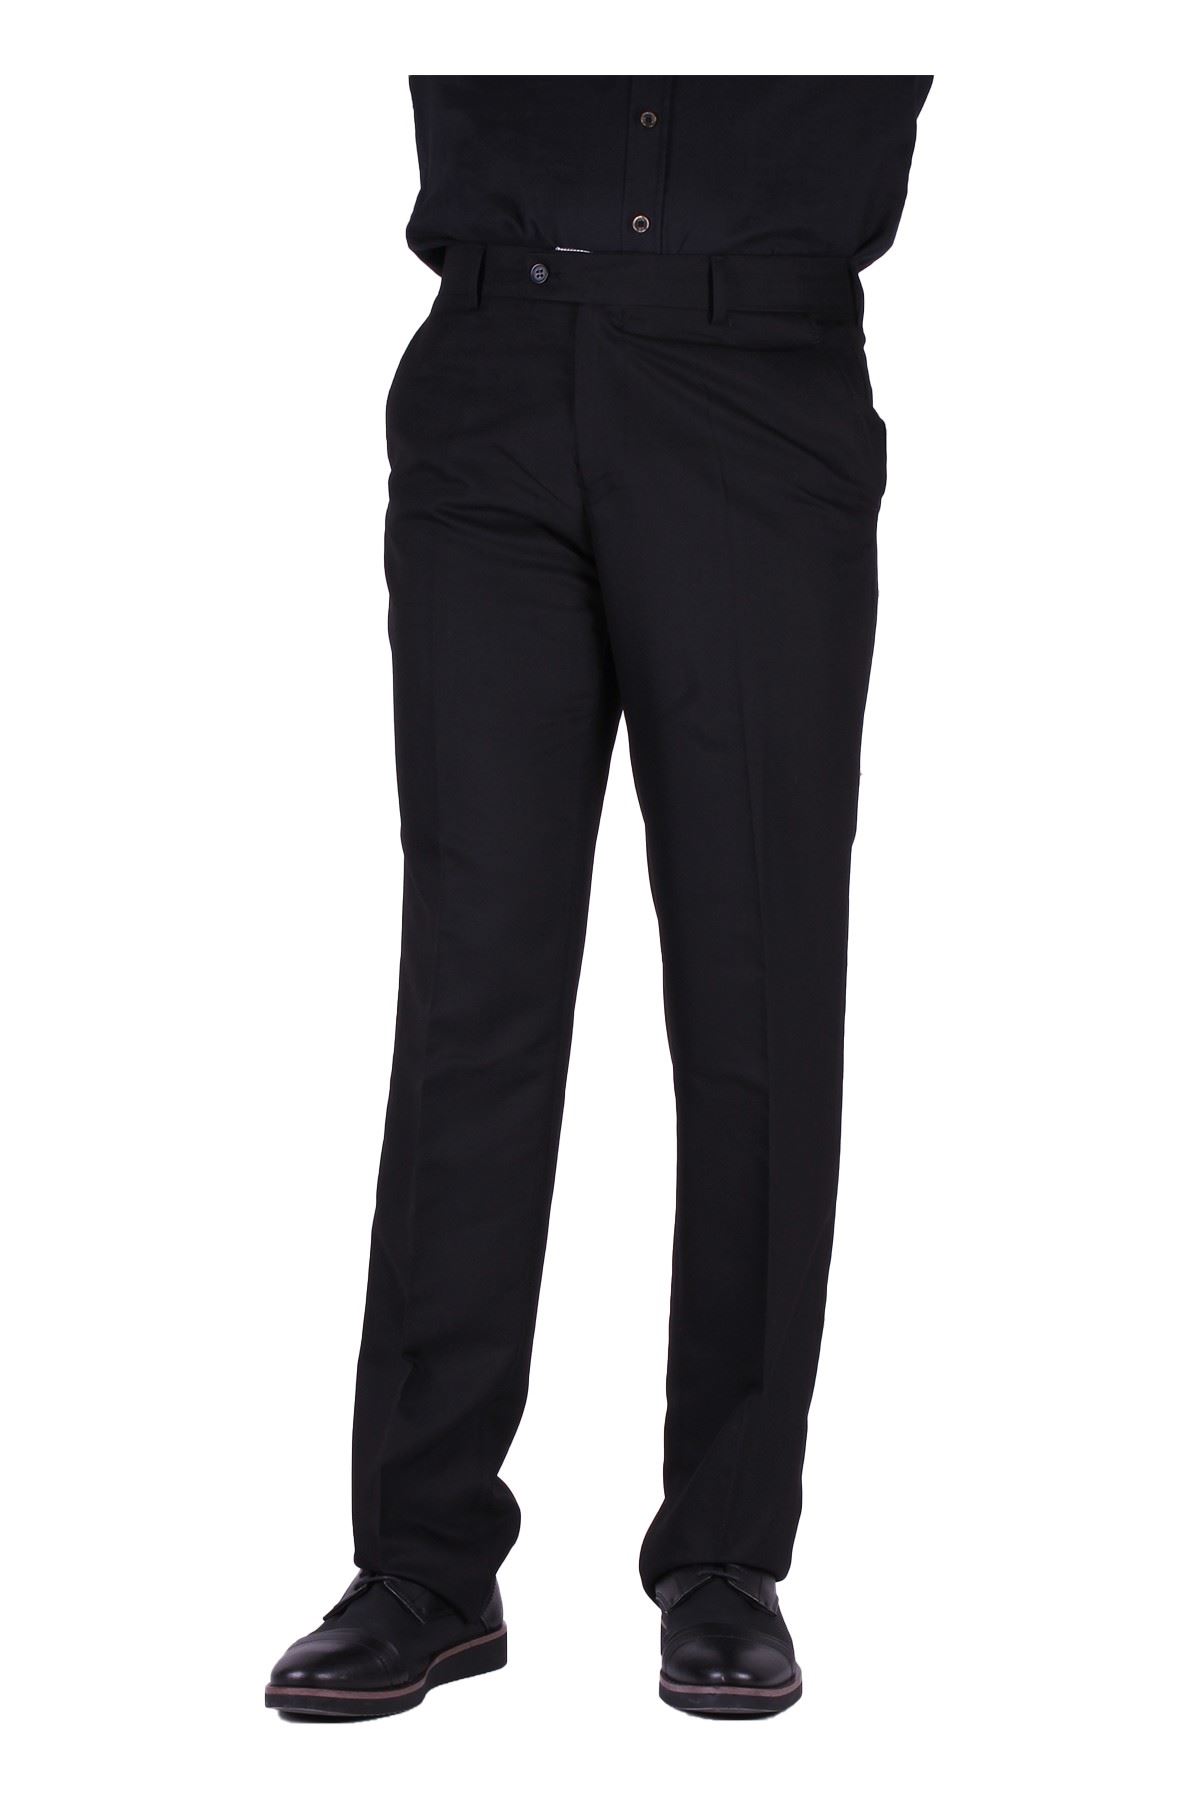 Giyinsen Erkek Siyah Klasik Pantolon - 23KL71M57001